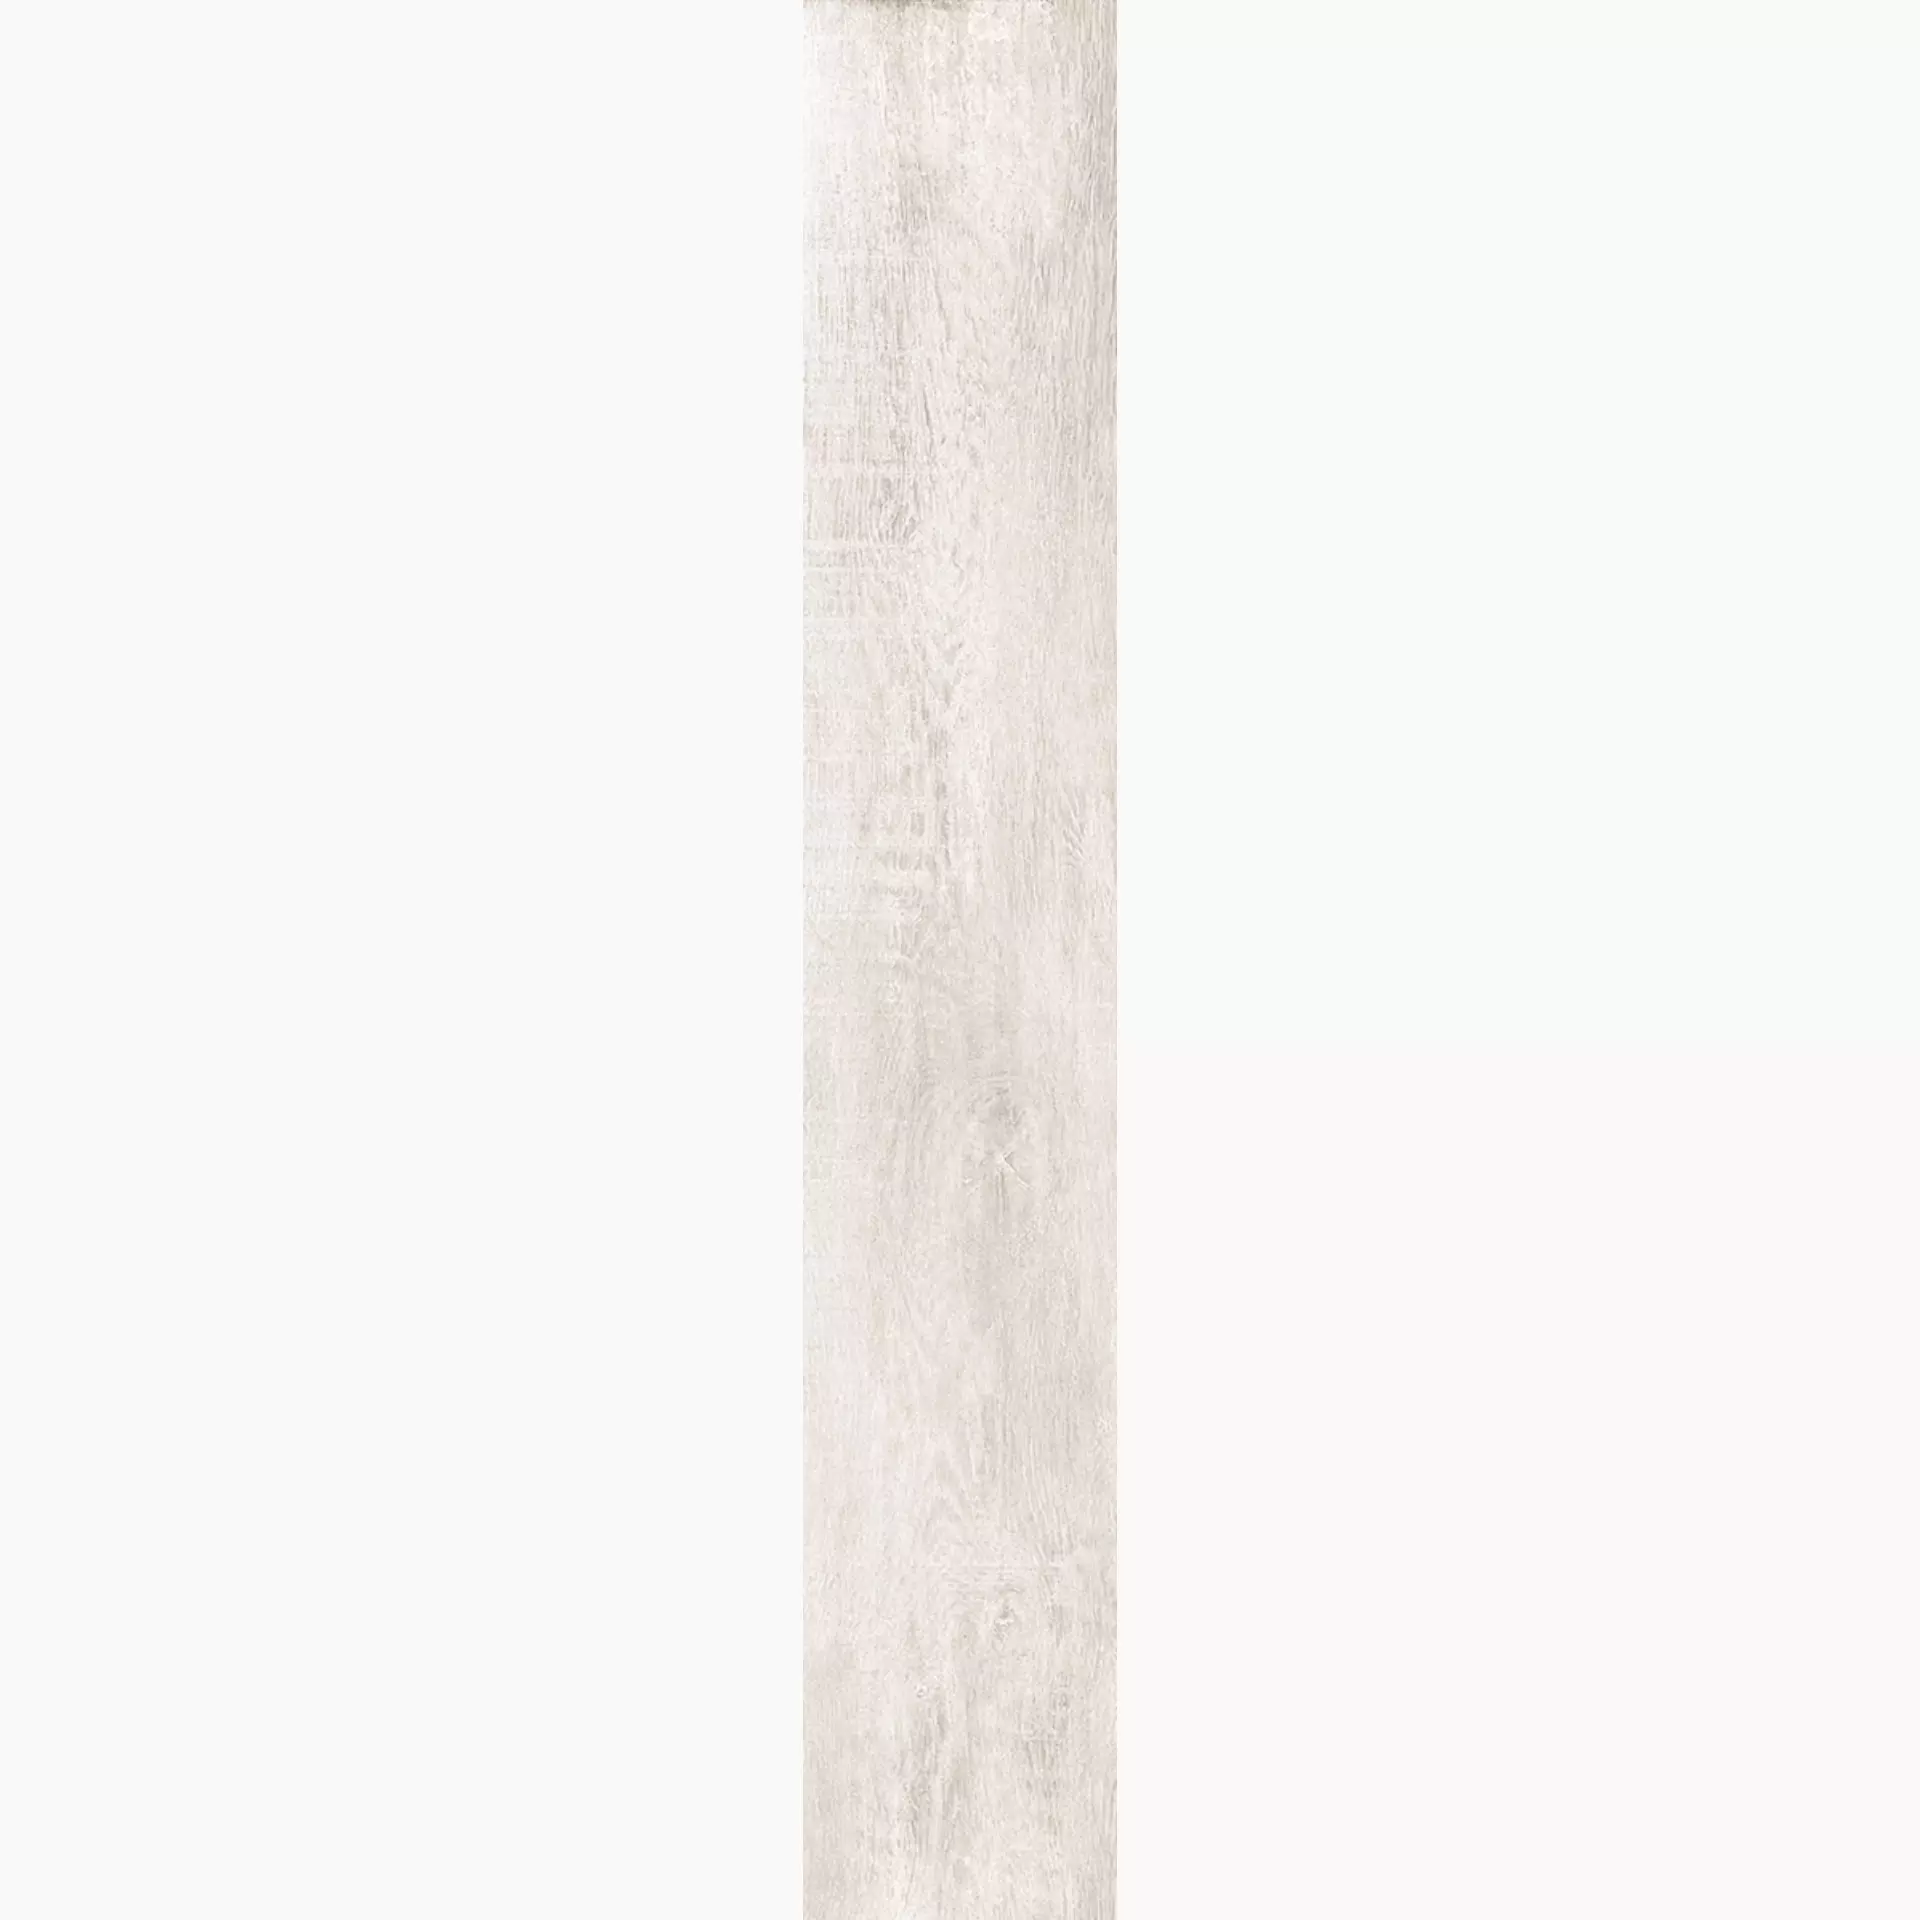 Rondine Greenwood Bianco Grip J87530 7,5x45cm 8,5mm